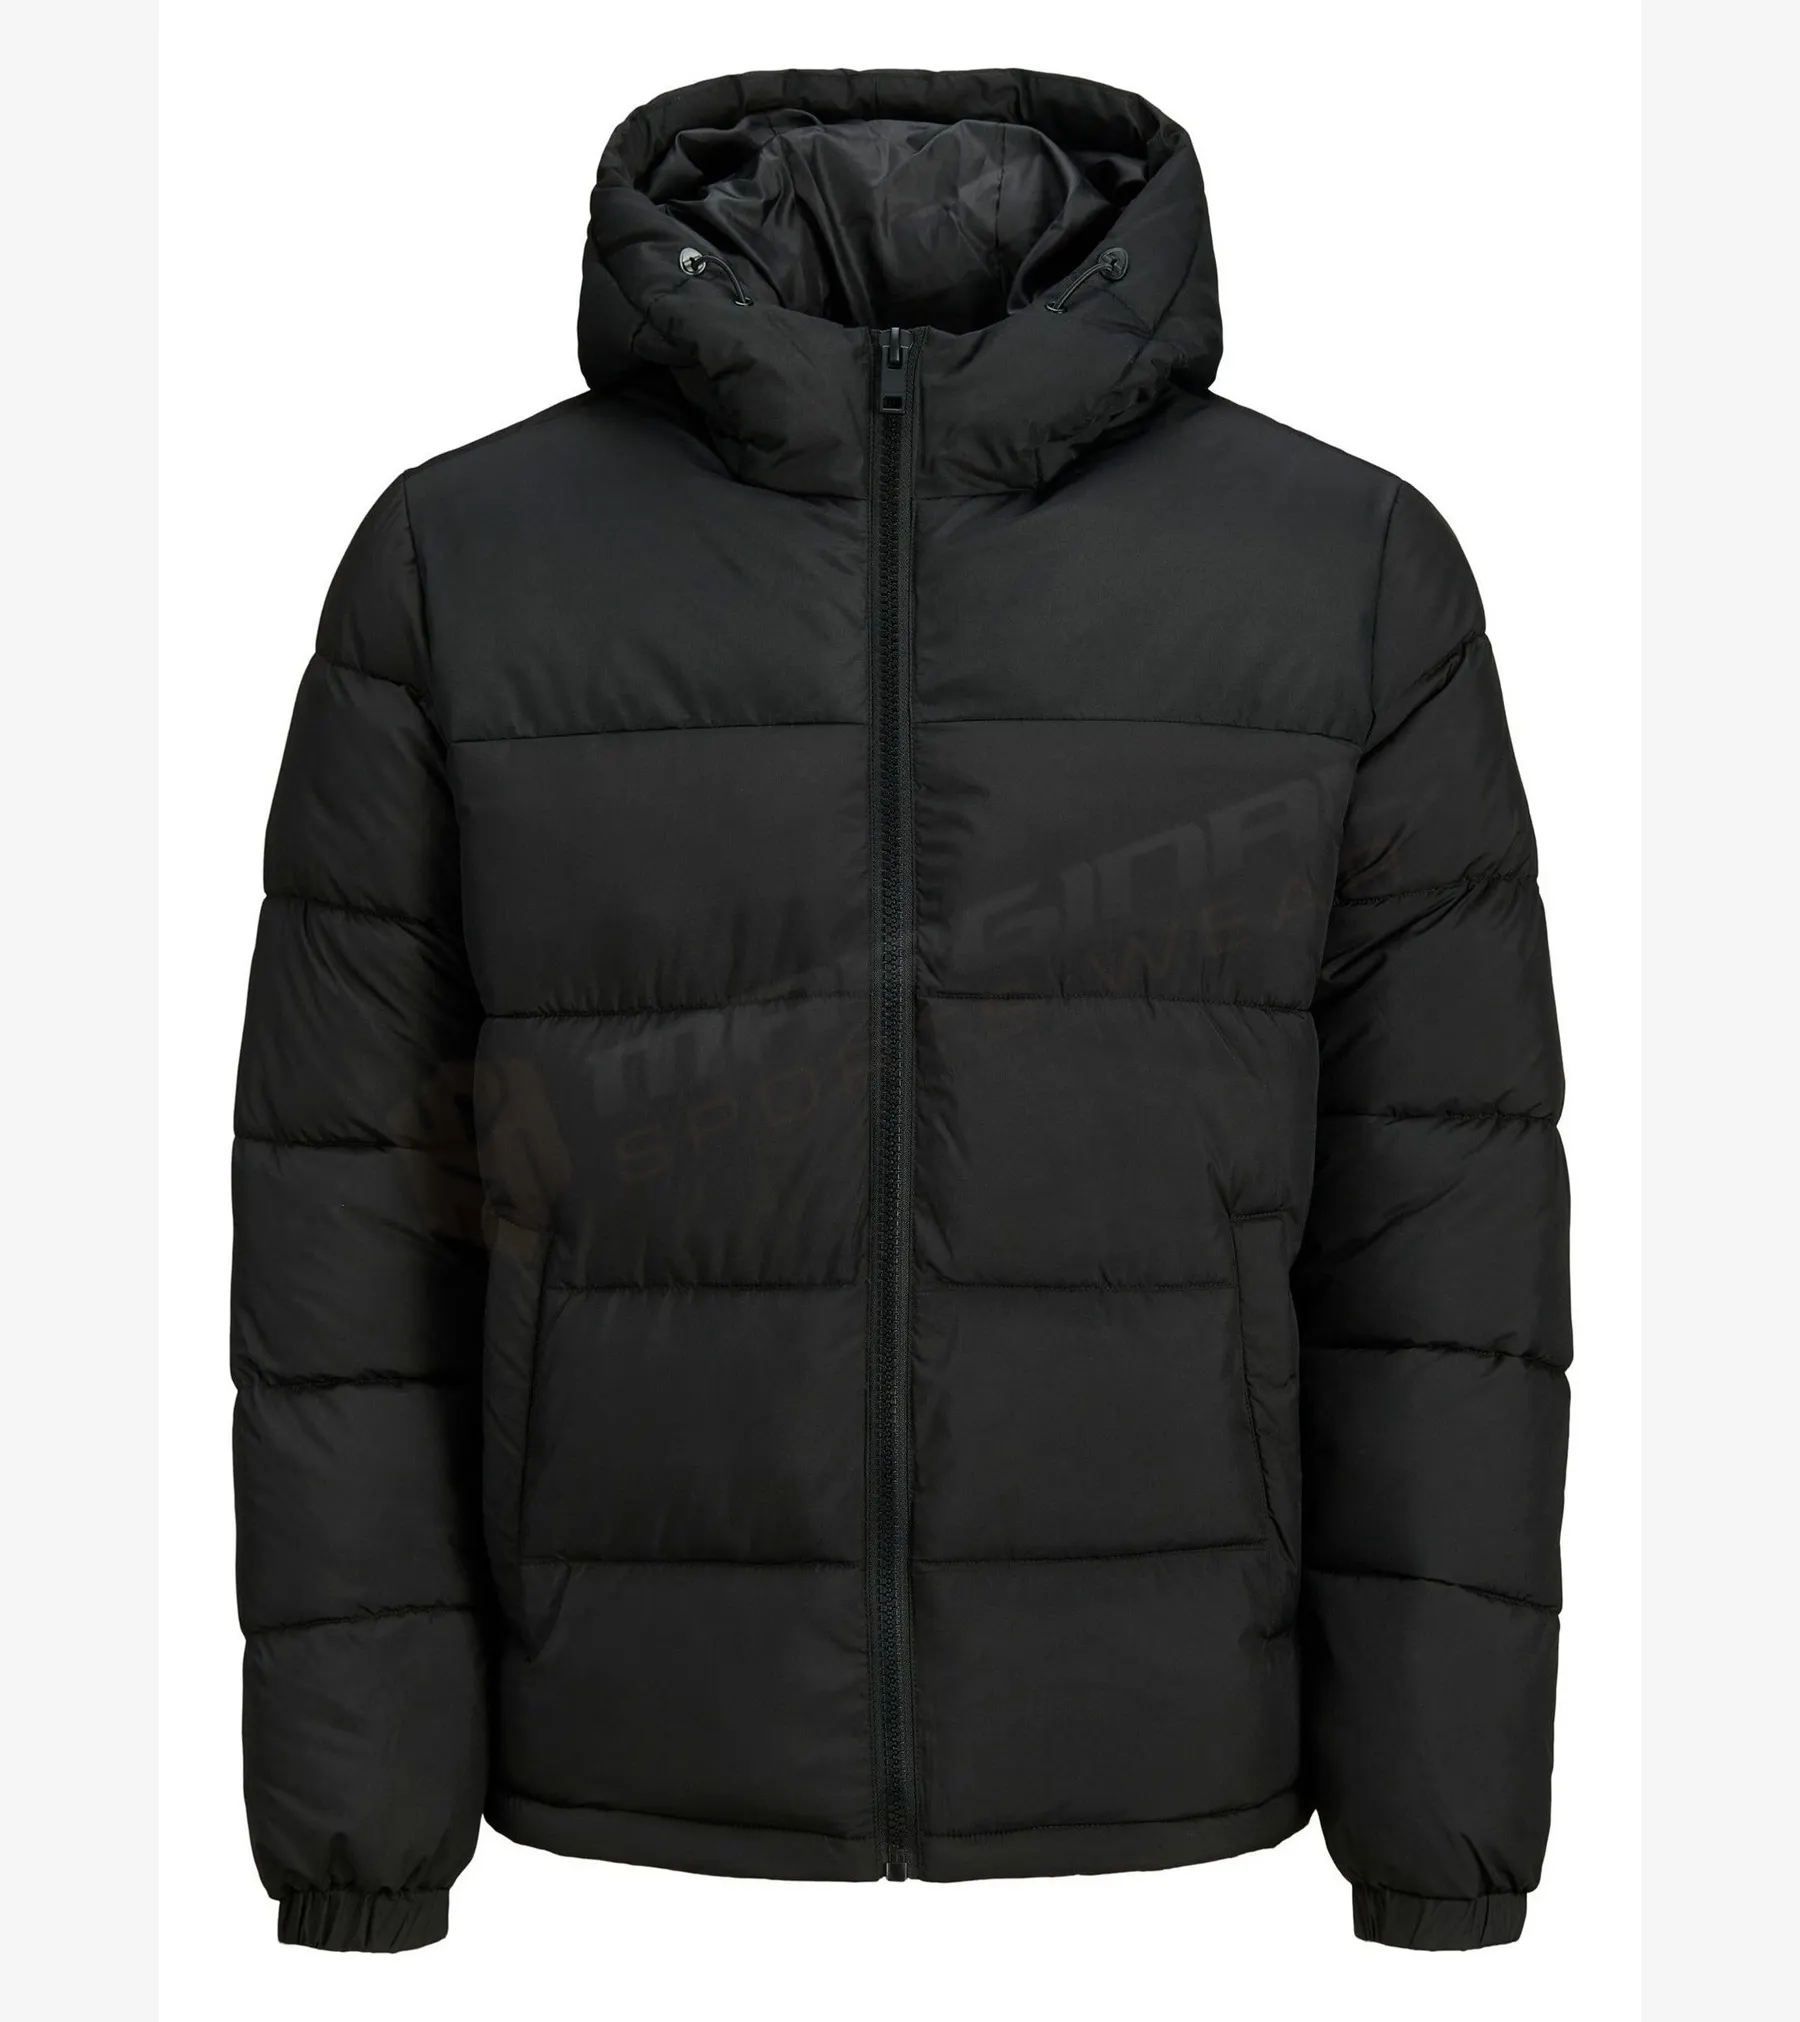 Abrigos de diseñador de ropa de invierno para hombre, chaqueta acolchada de plumón, suave, impermeable, impermeable, a la moda, color negro, talla grande